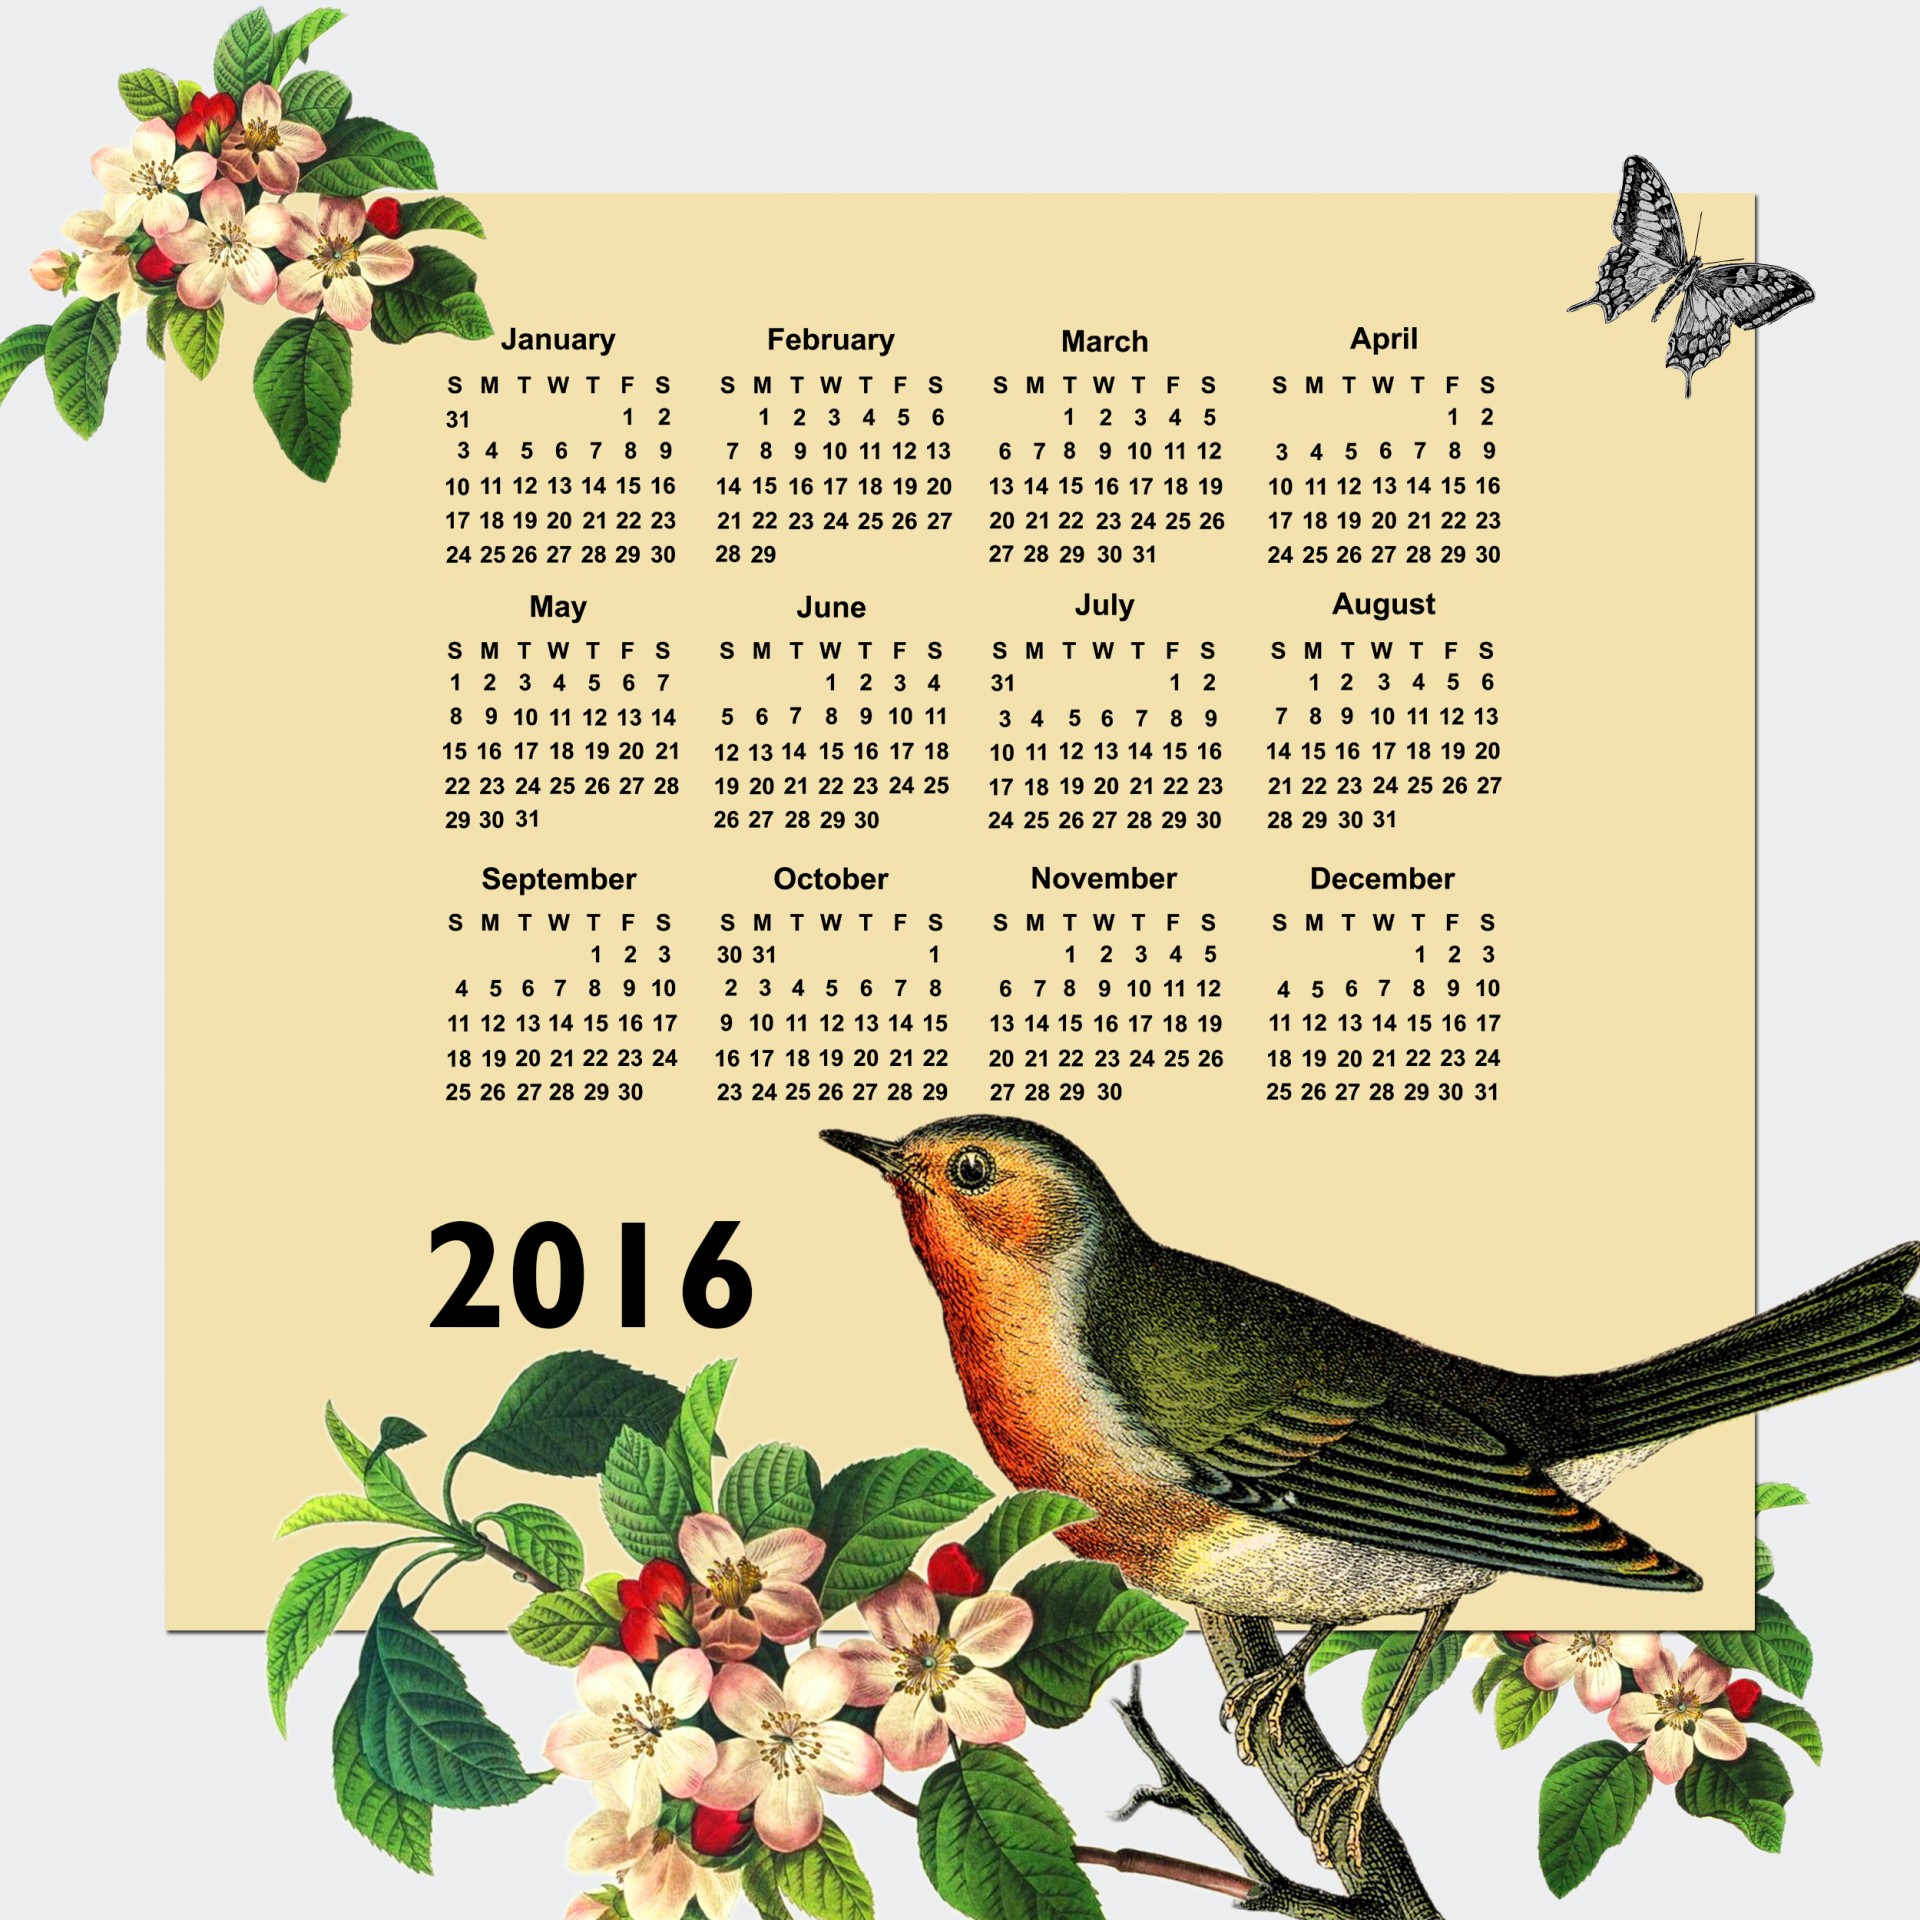 2016-calendar-vintage-bird-free-stock-photo-public-domain-pictures